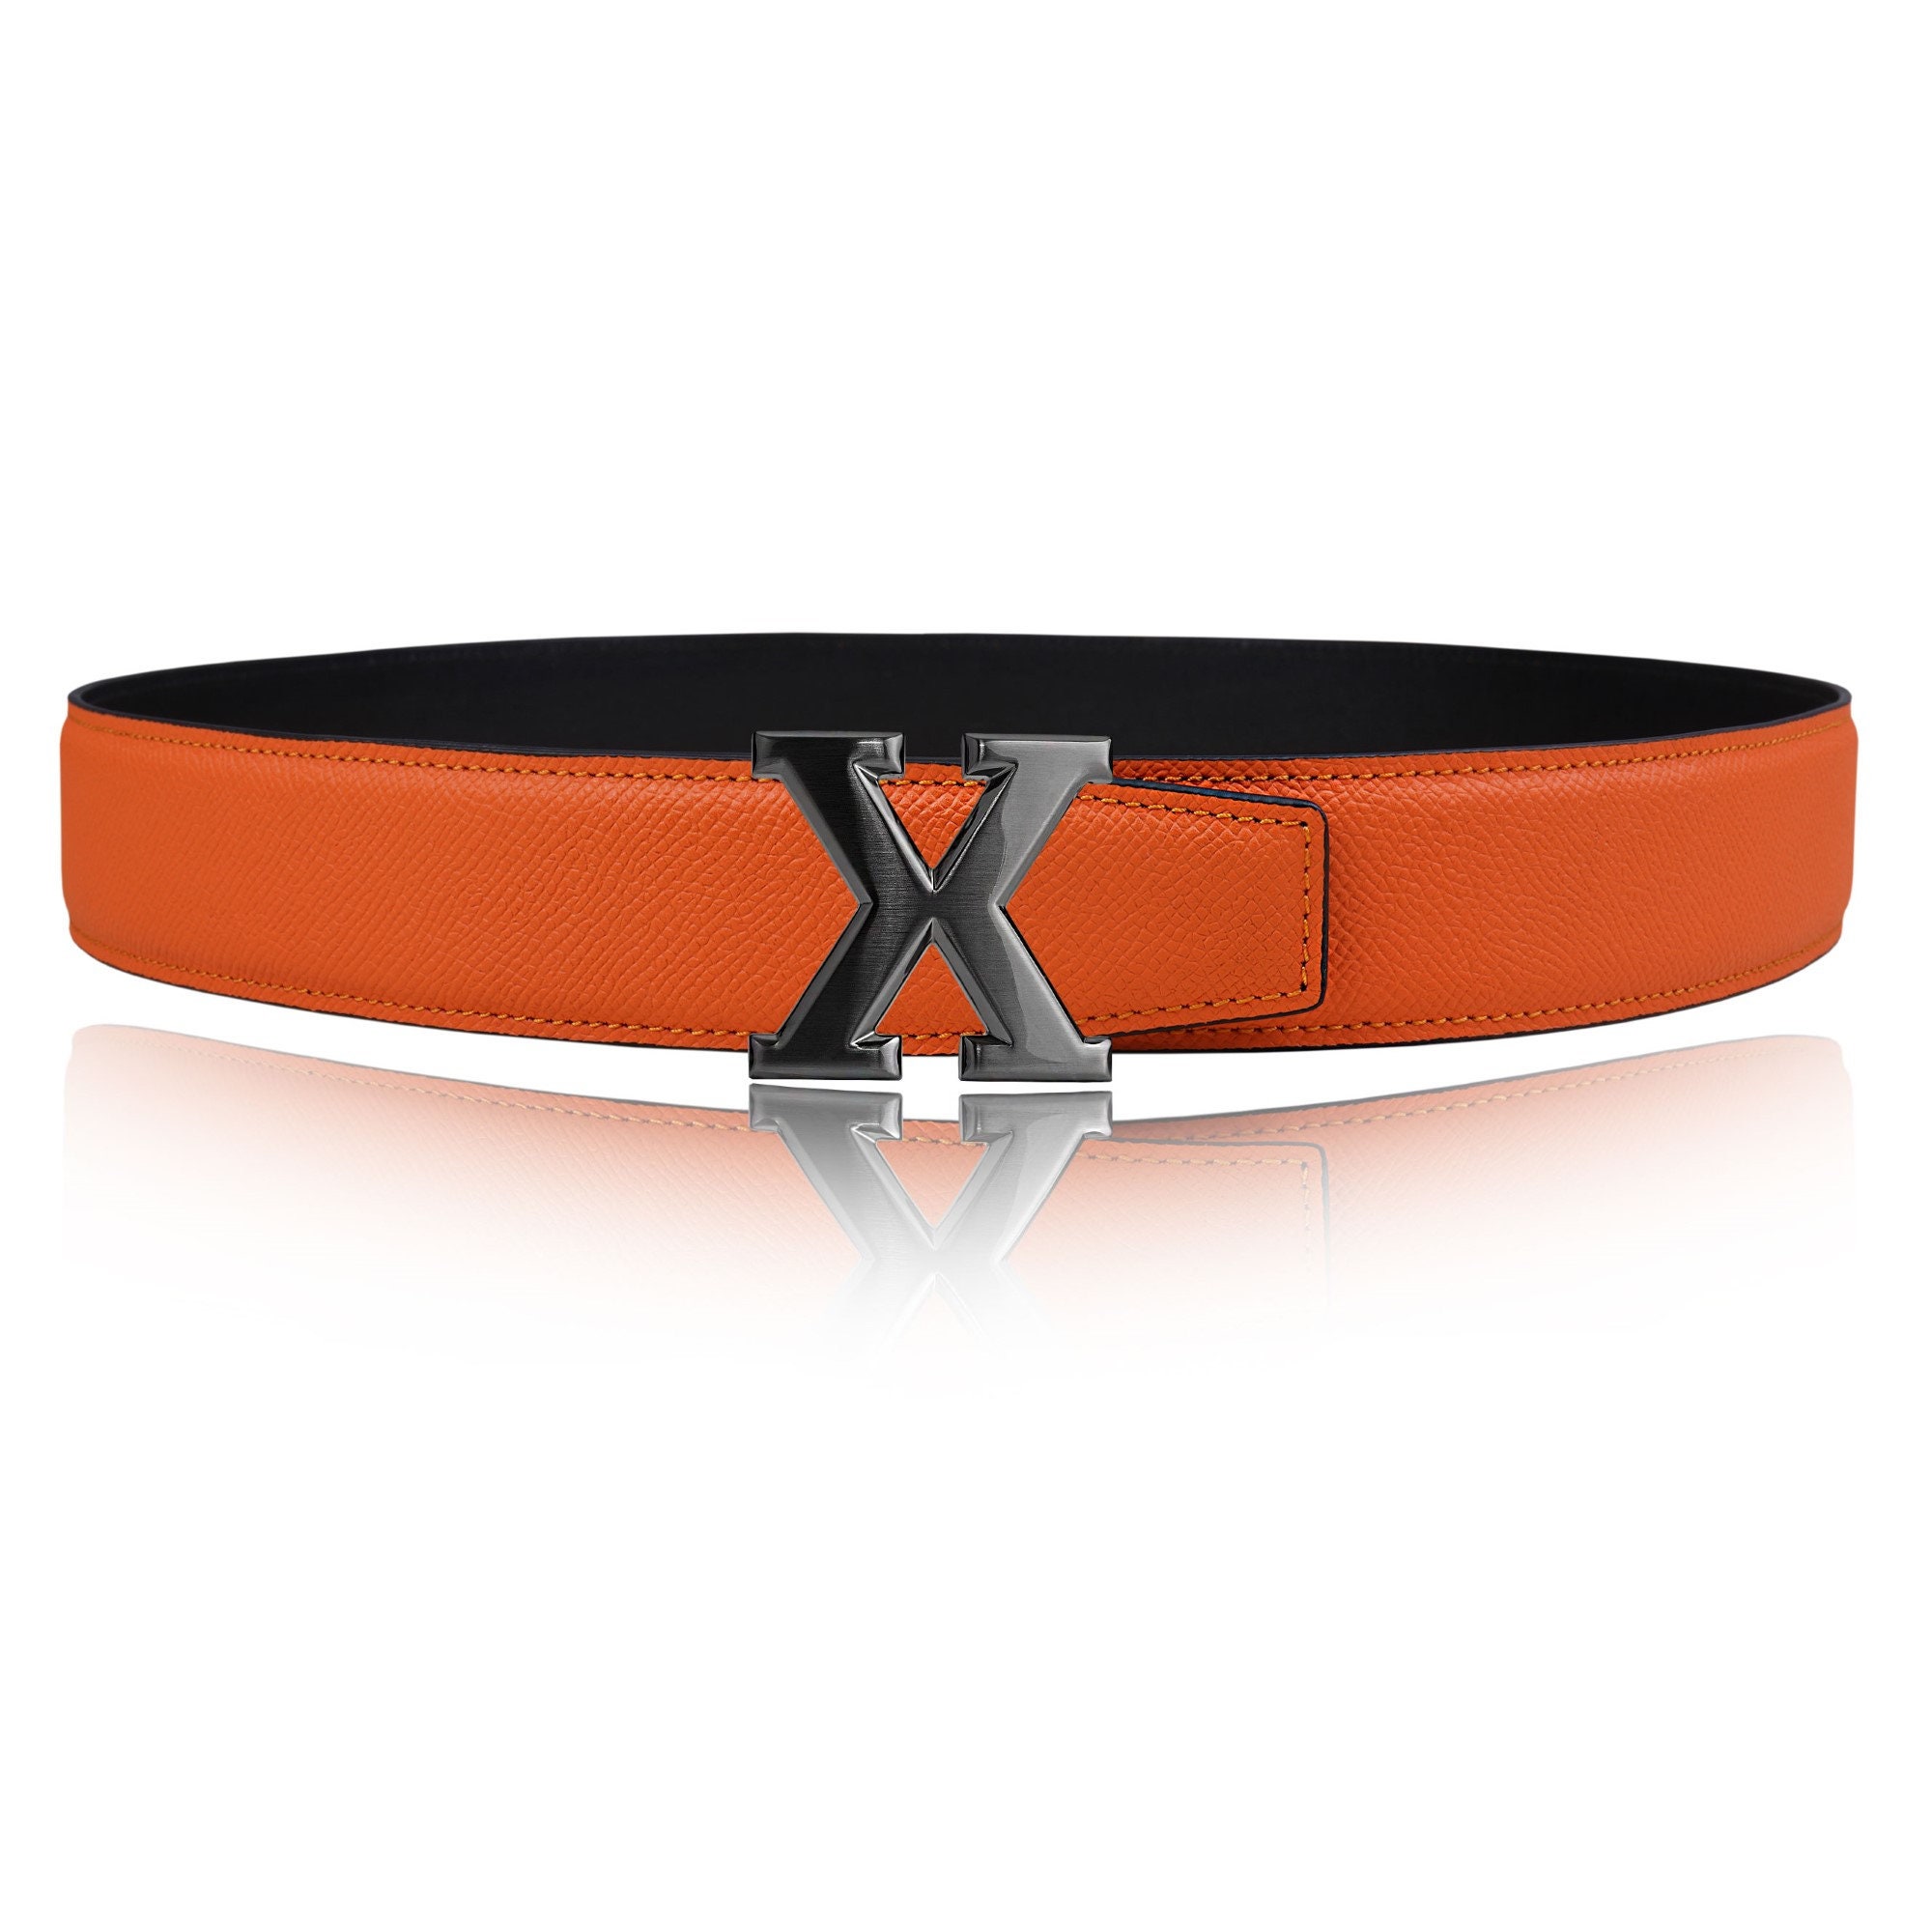 Buy Handmade Leather Belt in Orange 32 Mm 1.25 or 40 Mm Online in India 